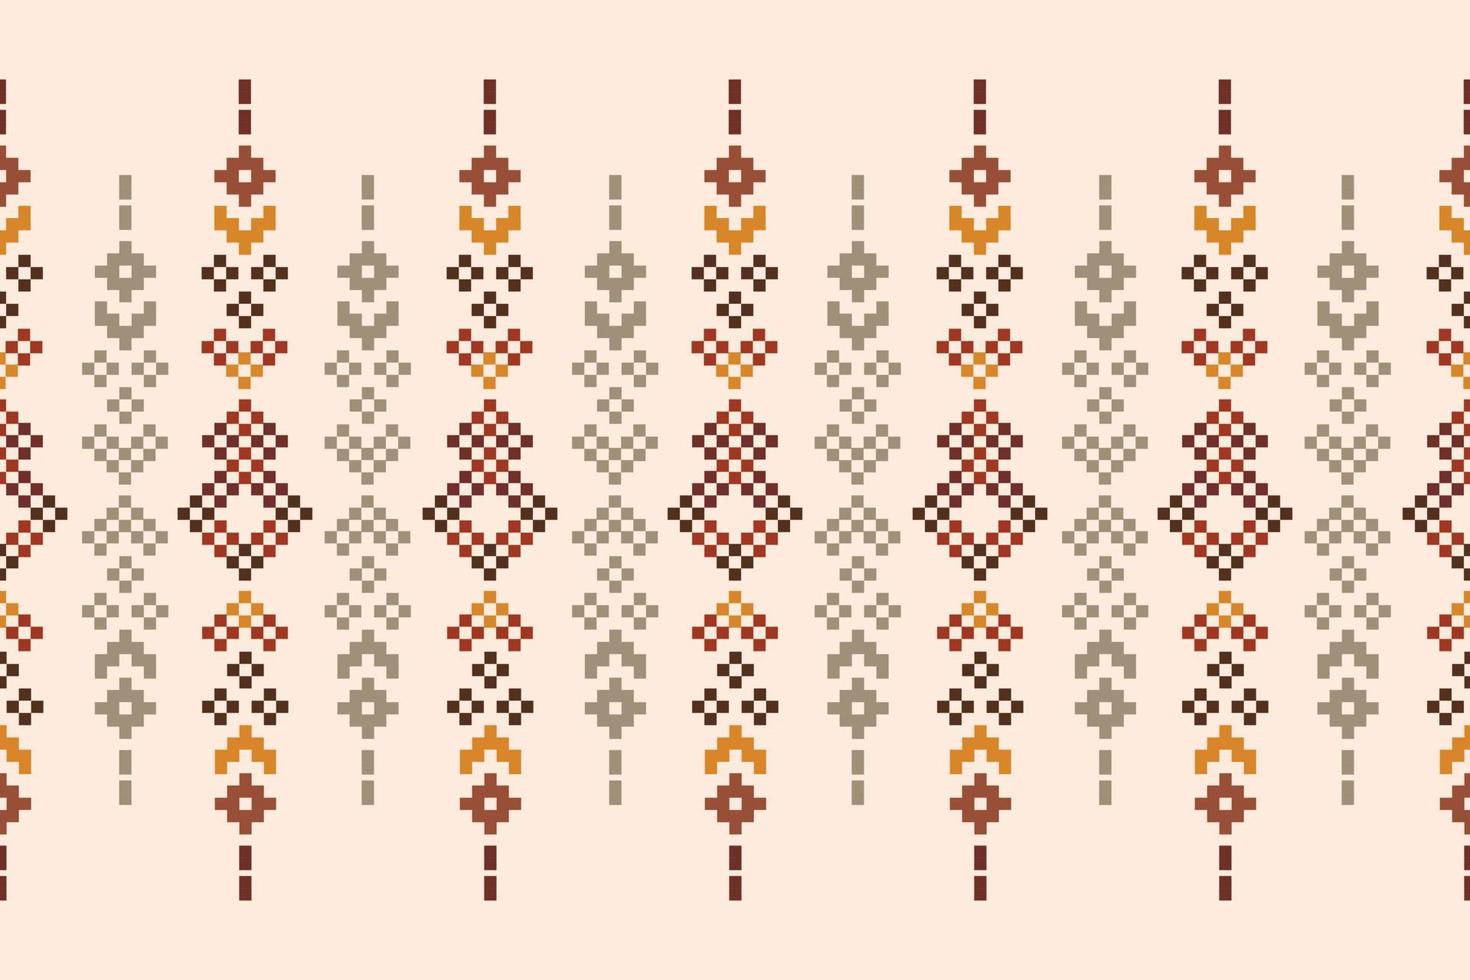 etnisk geometrisk tyg mönster korsa stitch.ikat broderi etnisk orientalisk pixel mönster brun grädde bakgrund. abstrakt, vektor, illustration.för textur, kläder, inslagning, dekoration, matta. vektor